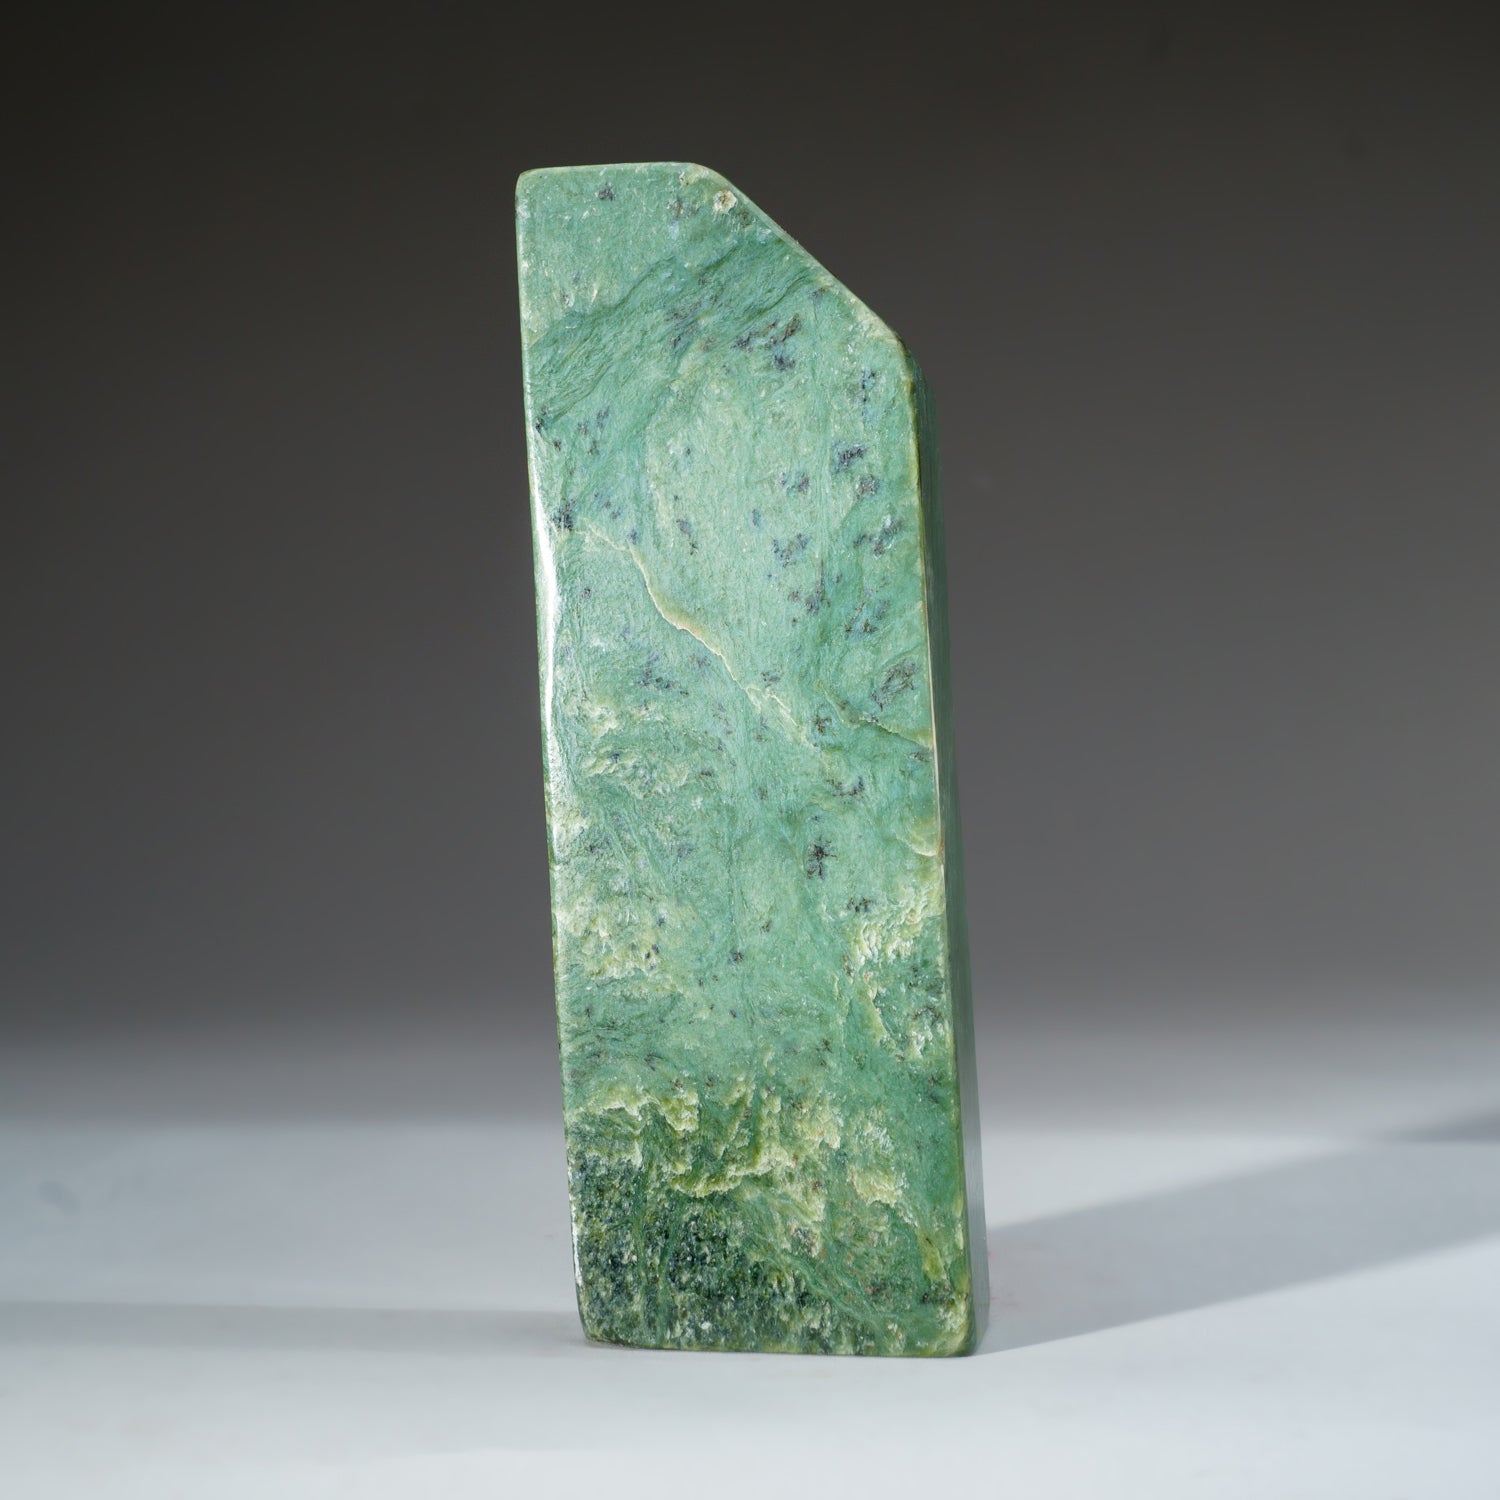 Polished Nephrite Jade Freeform from Pakistan (2.2 lbs)